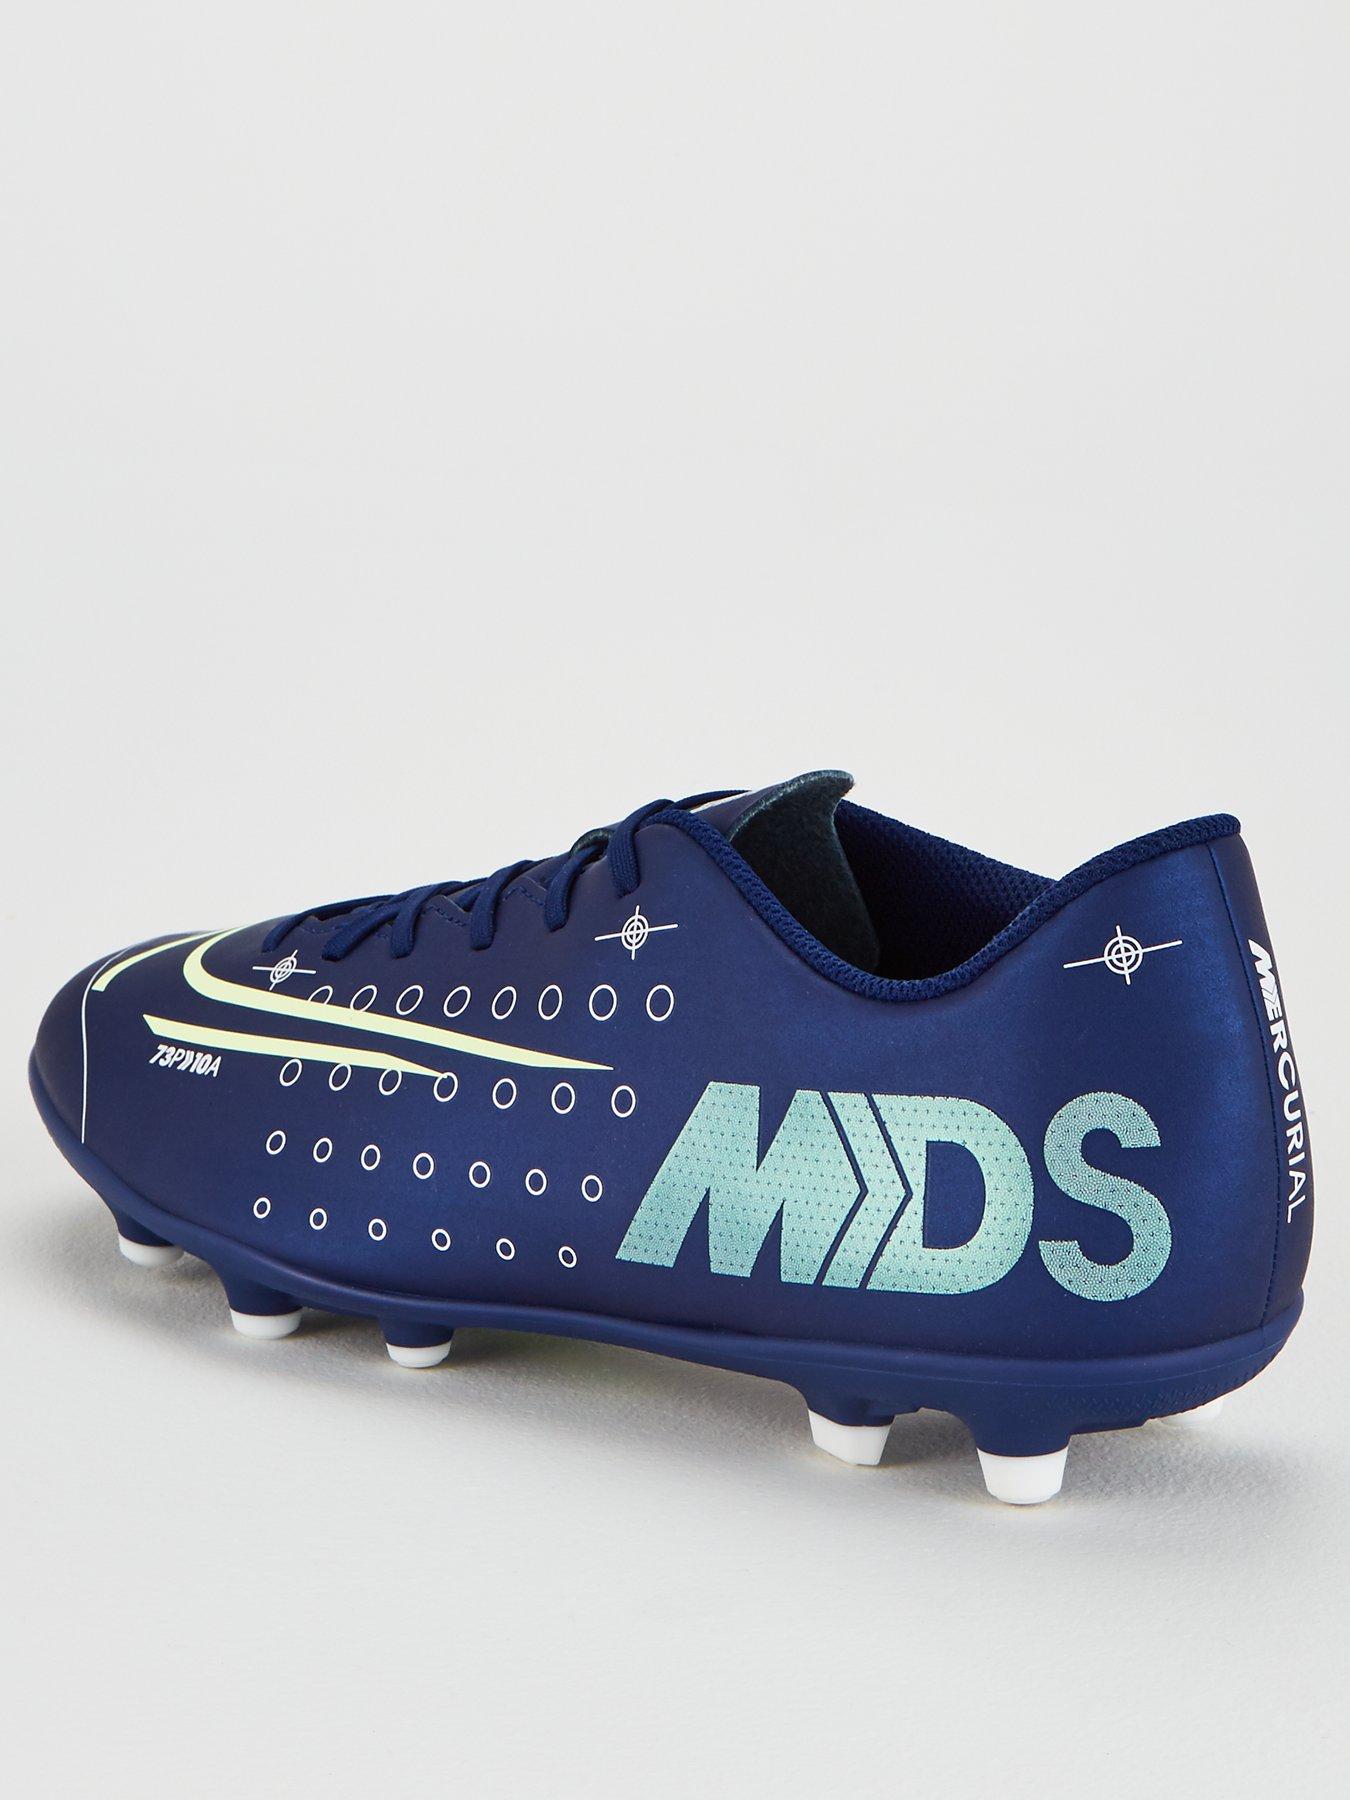 Nike Mercurial Vapor XI SG Pro Football Boots, Mens Soccer